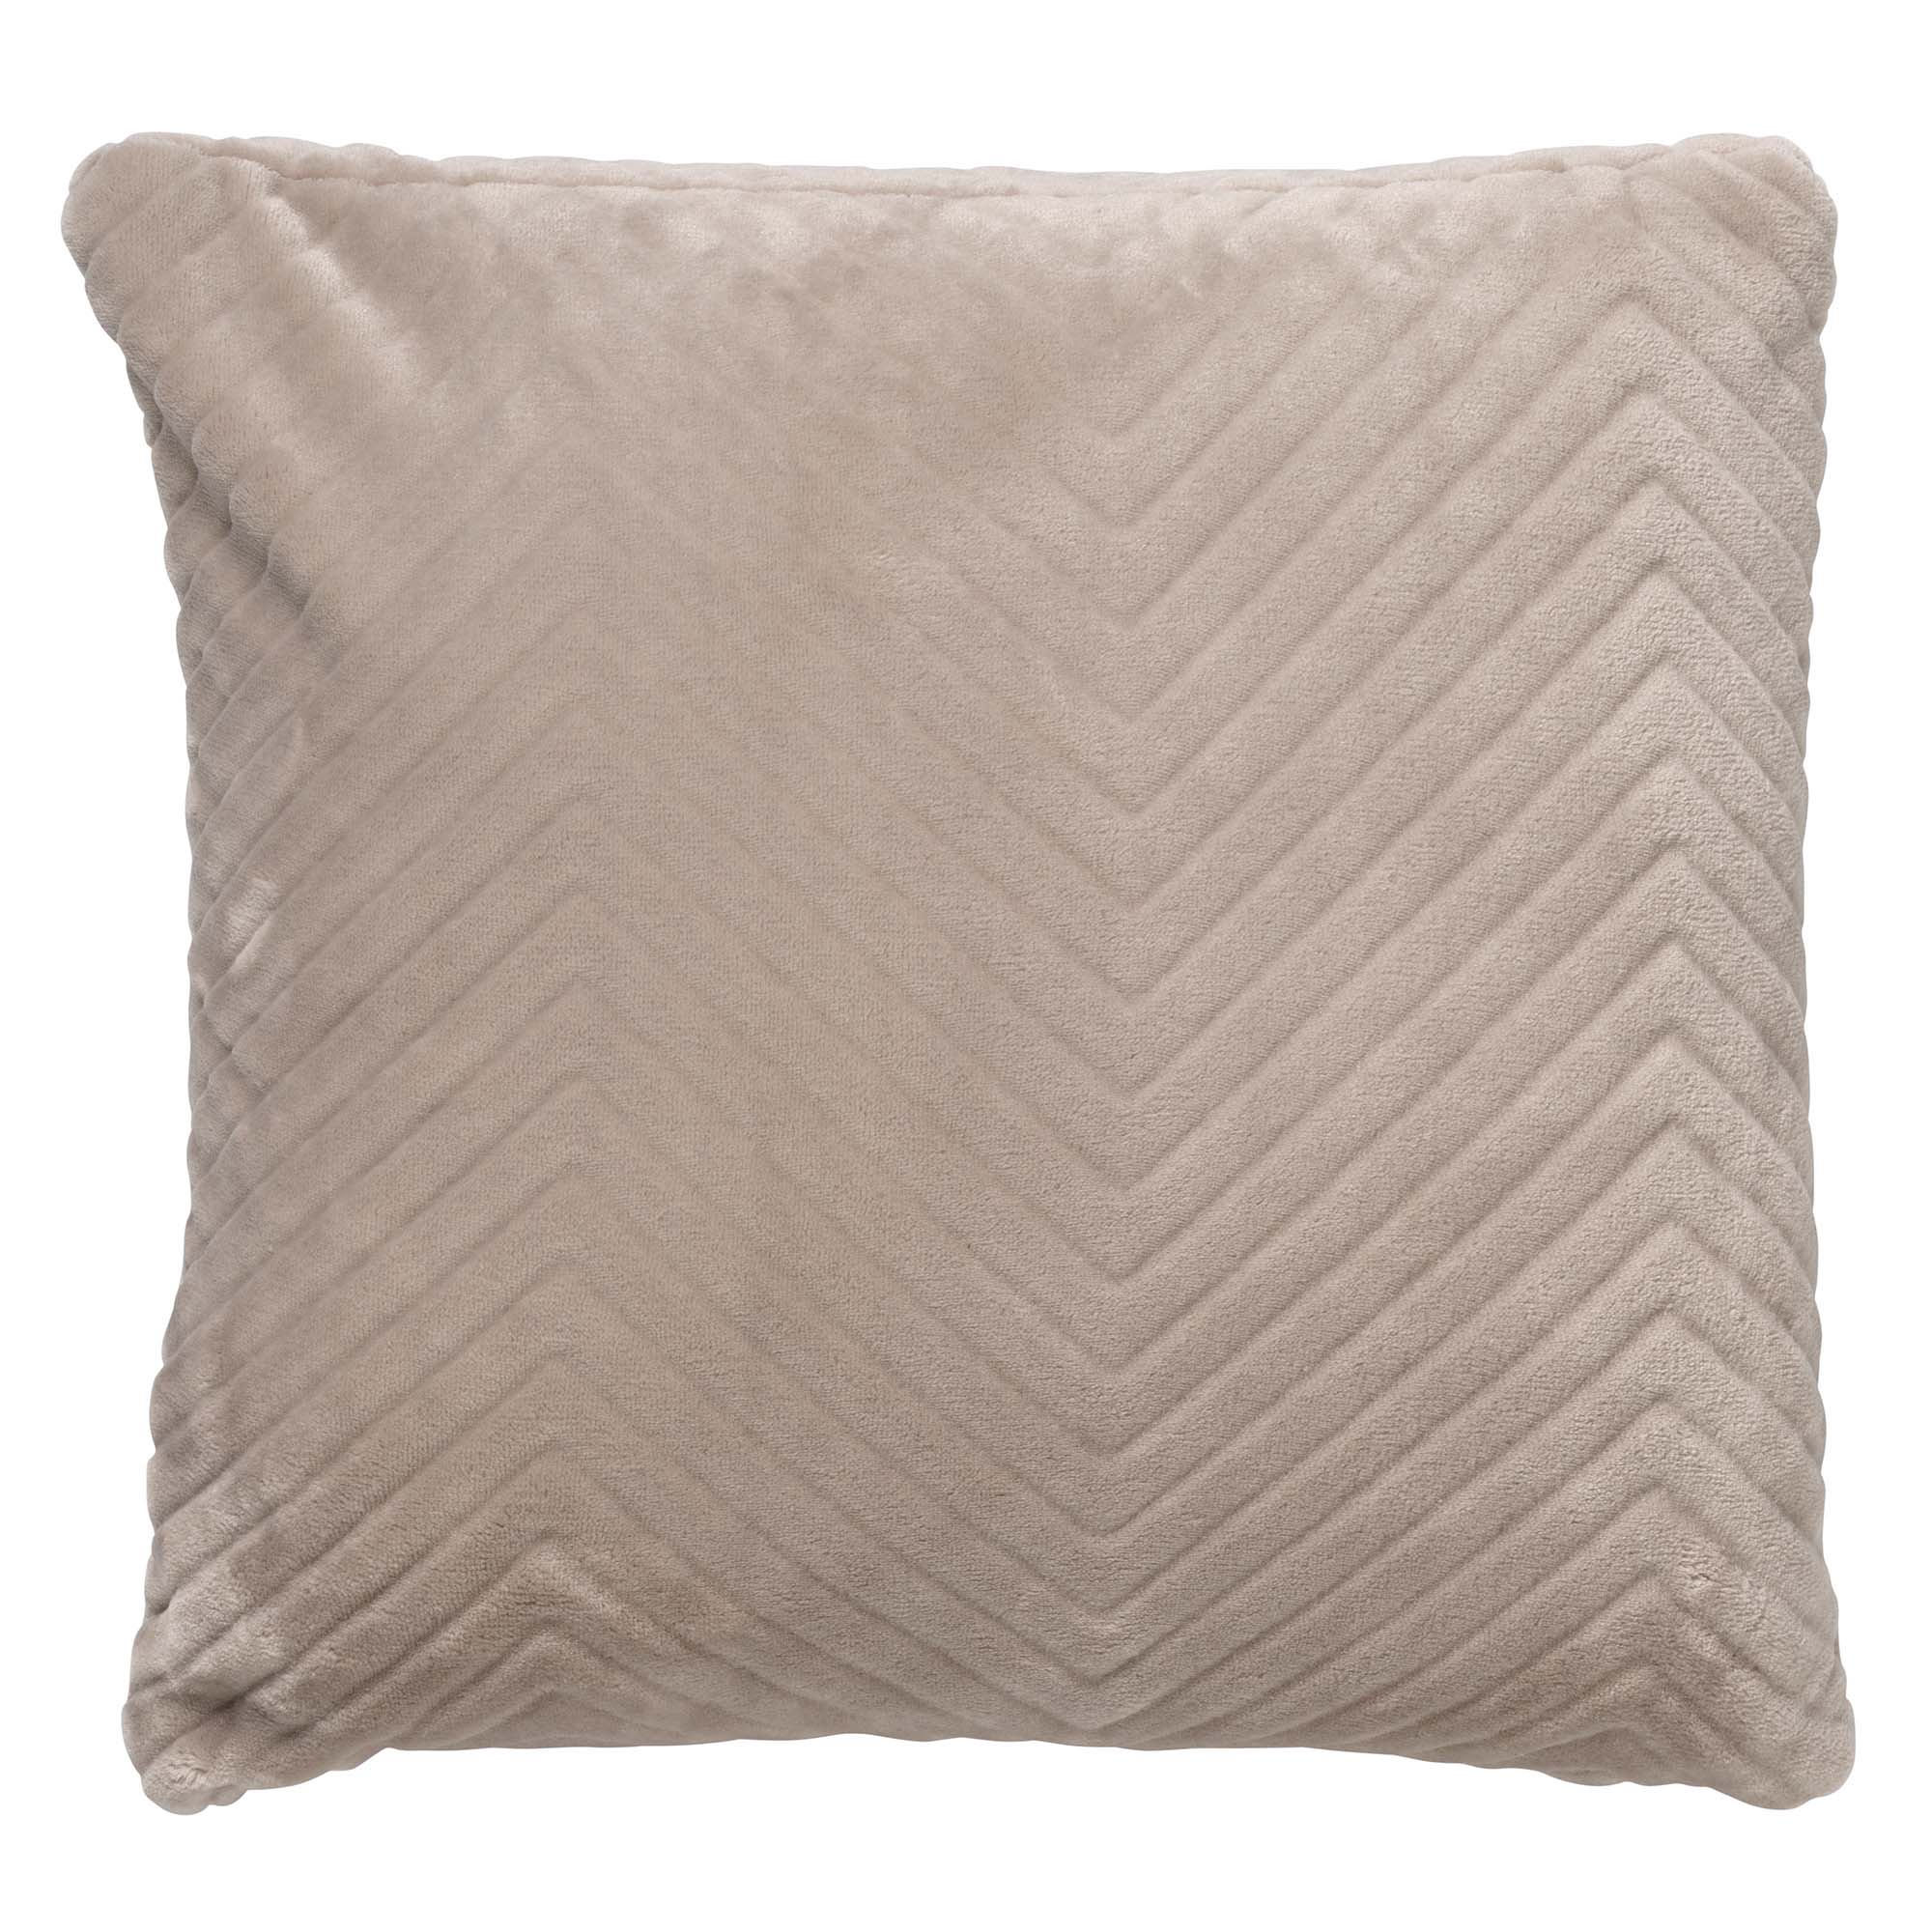 ZICO - Cushion with pattern 45x45 cm Pumice Stone